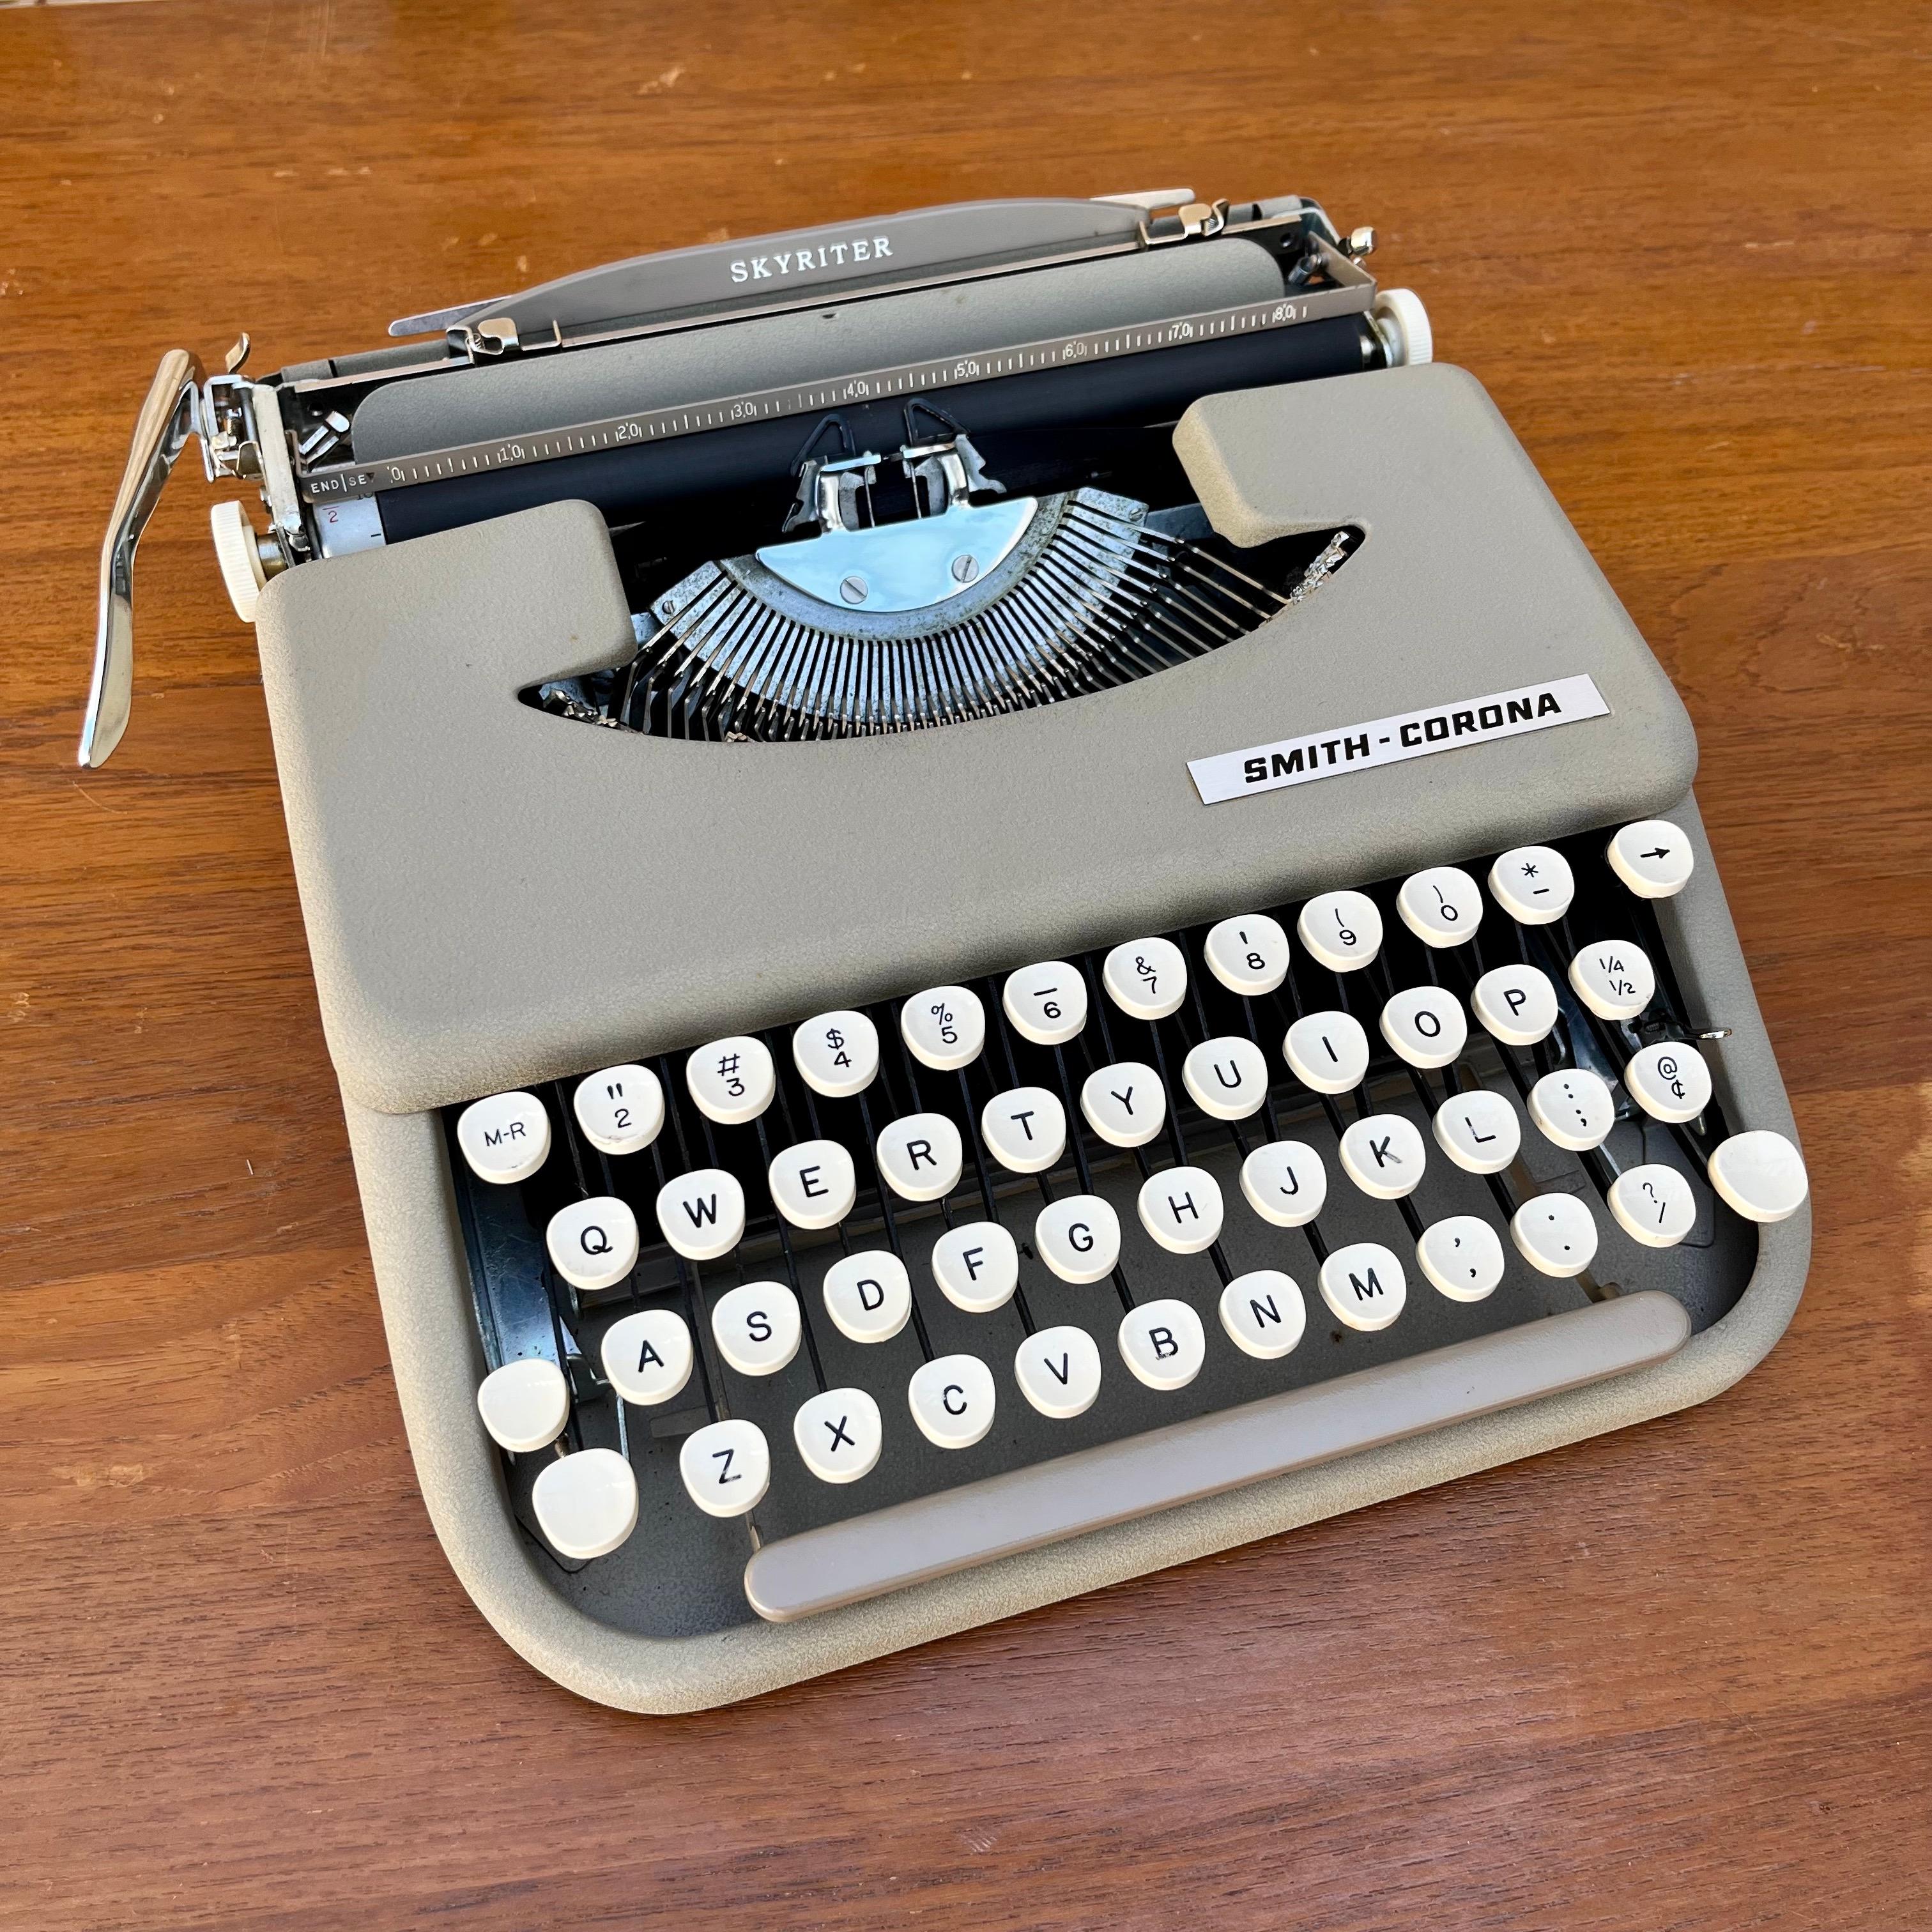 Vintage Mid-Century Modern Smith Corona Skyriter portable typewriter with the original tan vinyl case. Circa 1960s 
Despite its lean lines, lightness, and simplicity the Smith Corona Skyriter Portable Typewriter is a sturdy machine, considered by